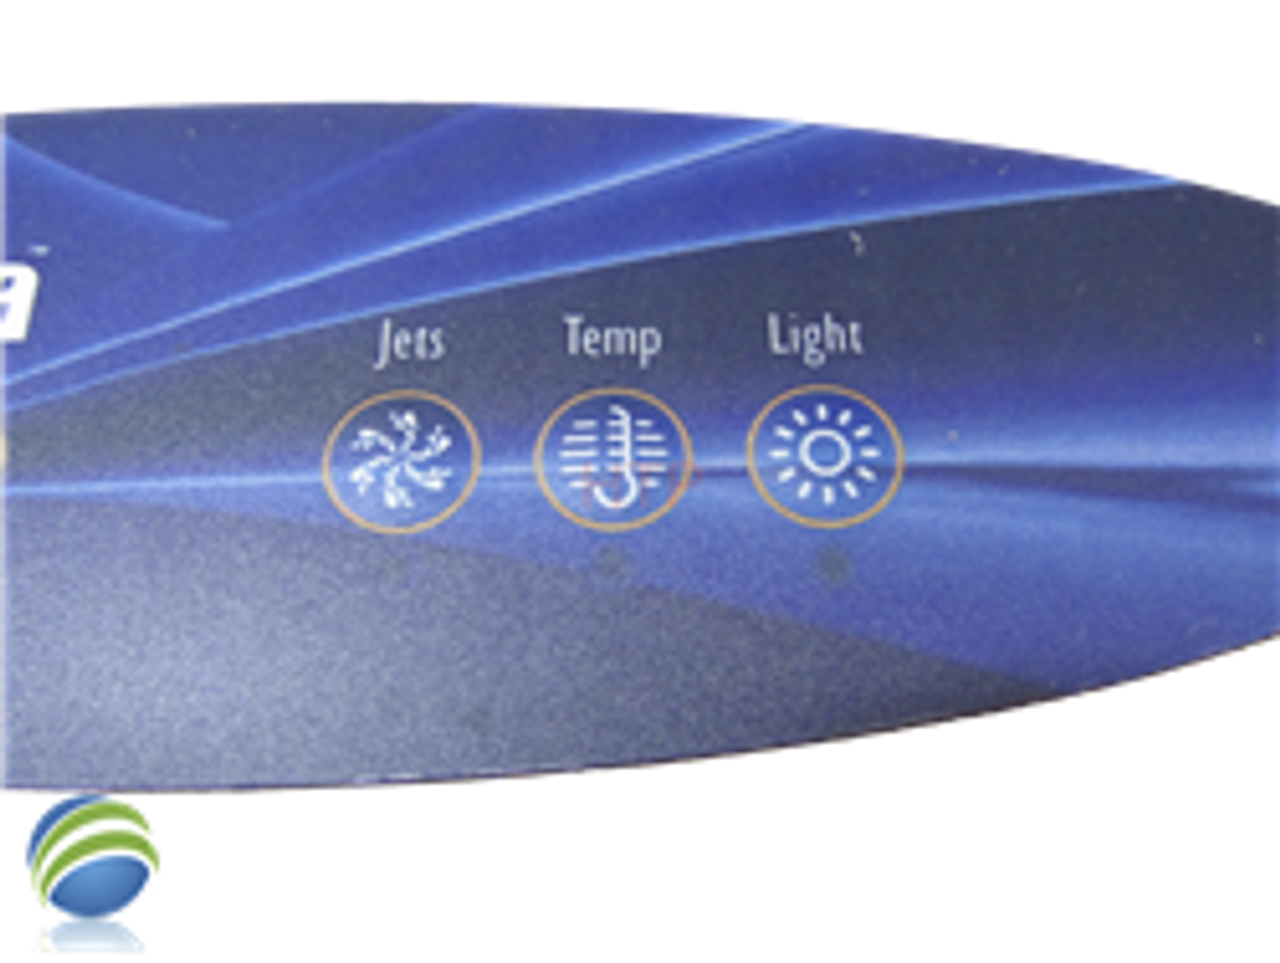 Balboa MVP 260 / VL260 3 Button LCD Overlay - Jets, Temp, Light